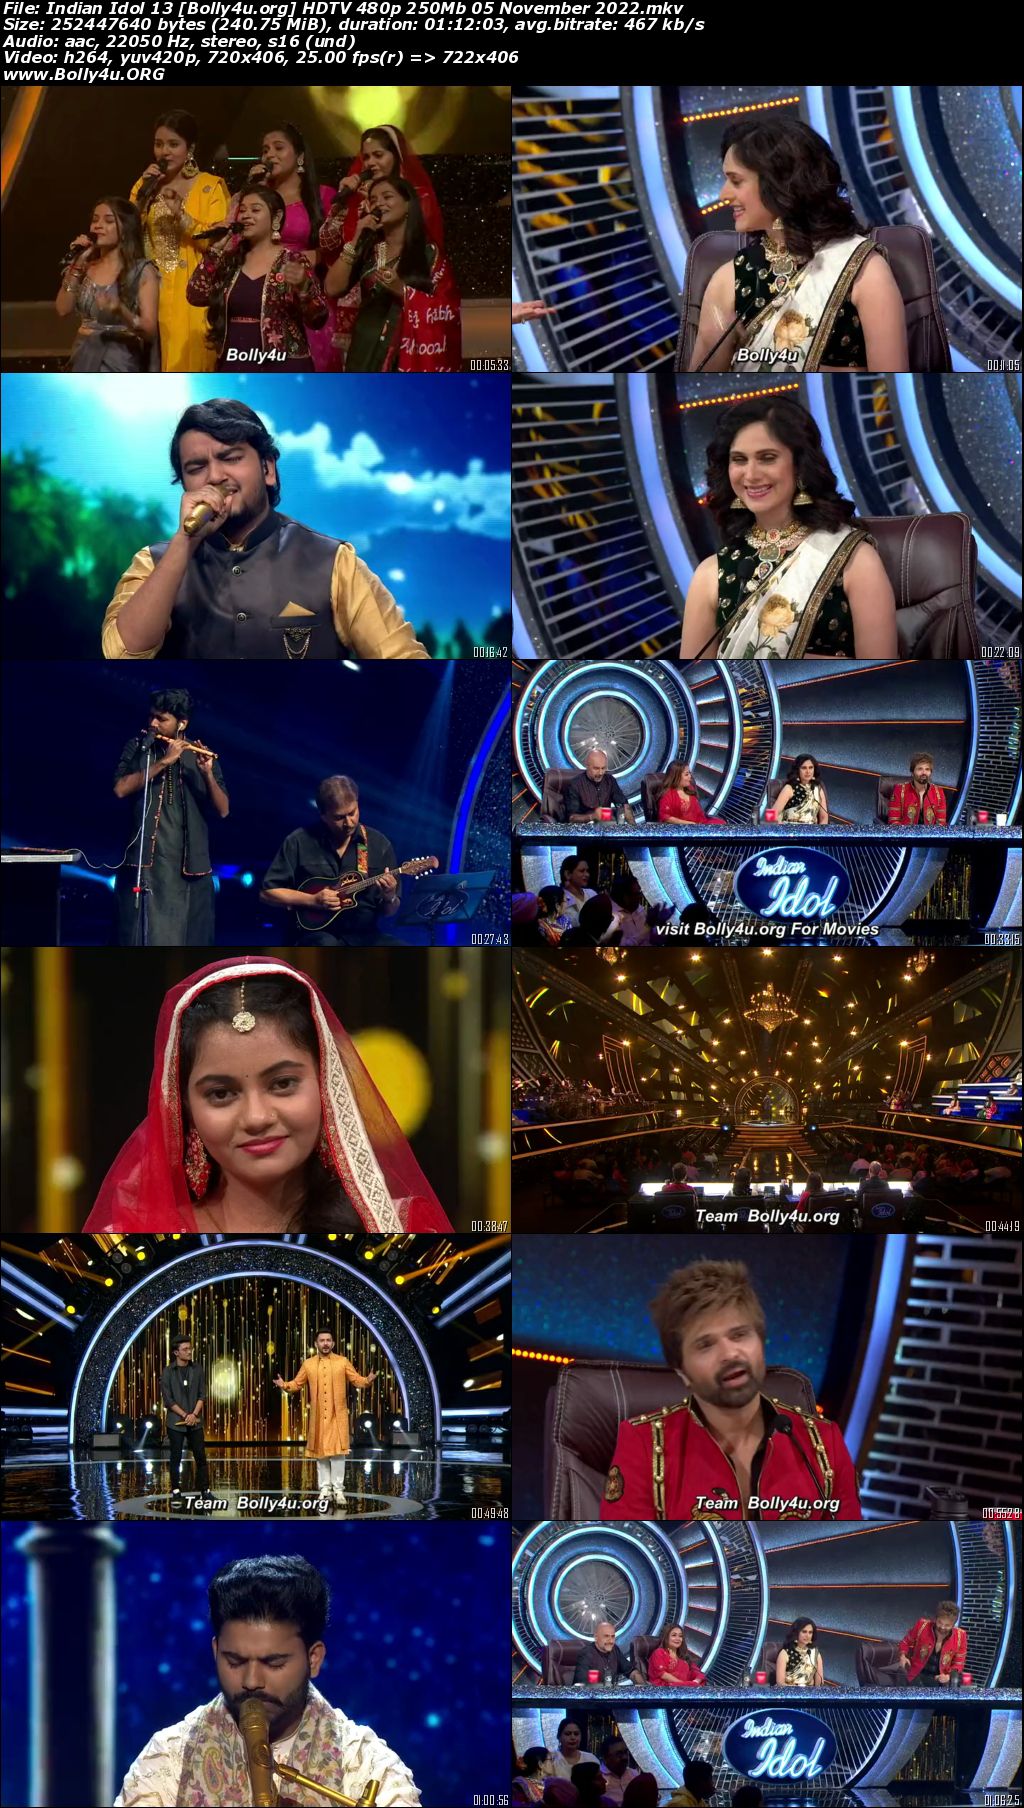 Indian Idol 13 HDTV 480p 250Mb 05 November 2022 download